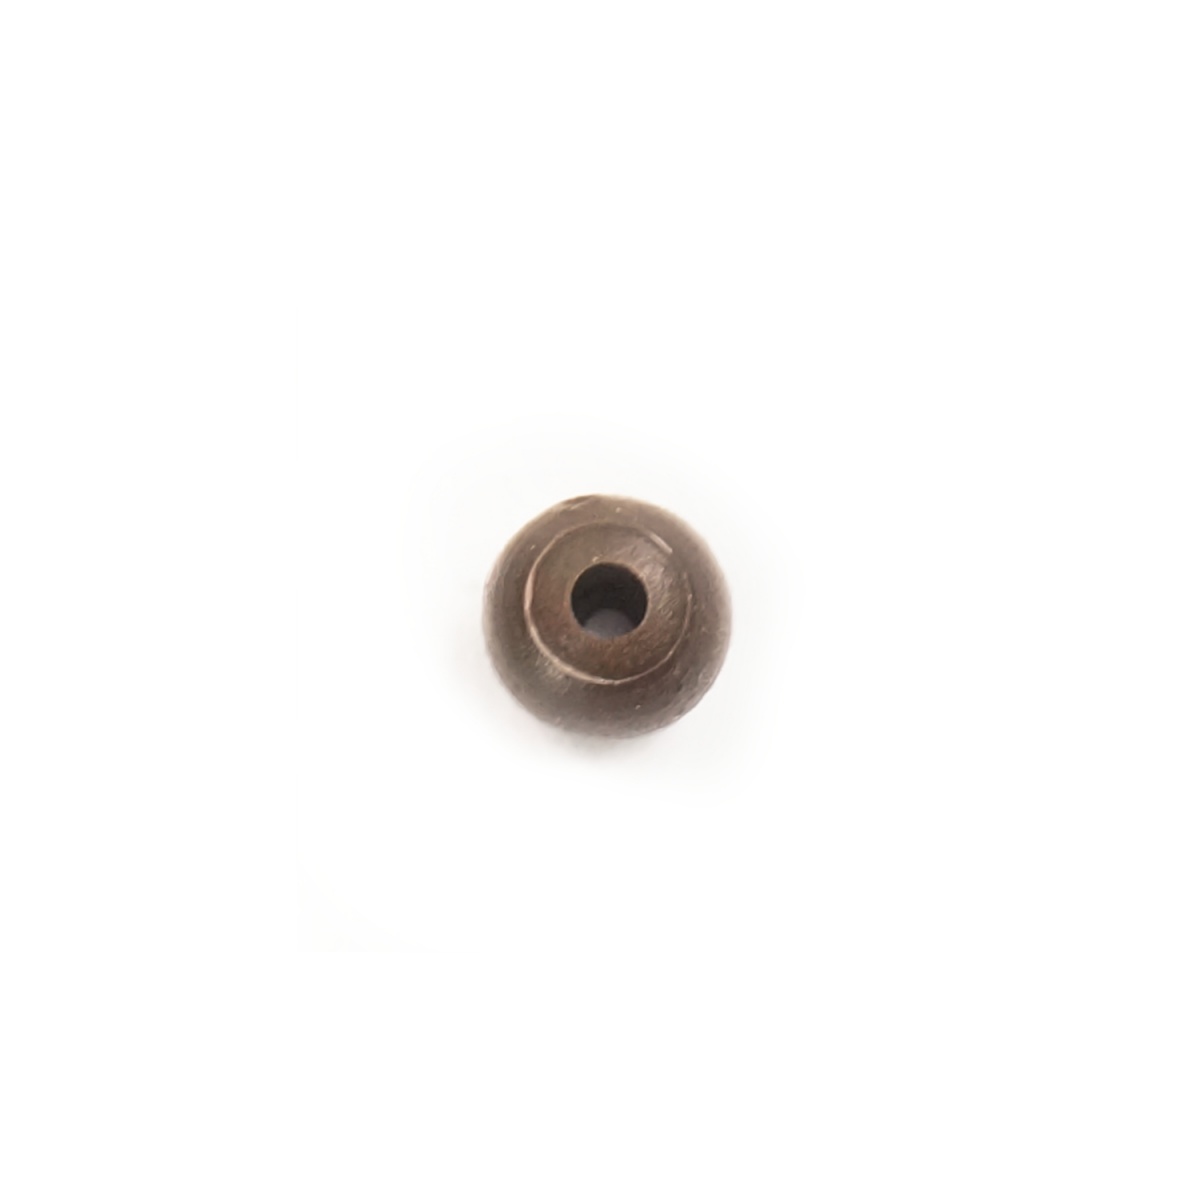 Korda Rubber Bead 5mm muddy brown / brązowy rozmiar / kolor